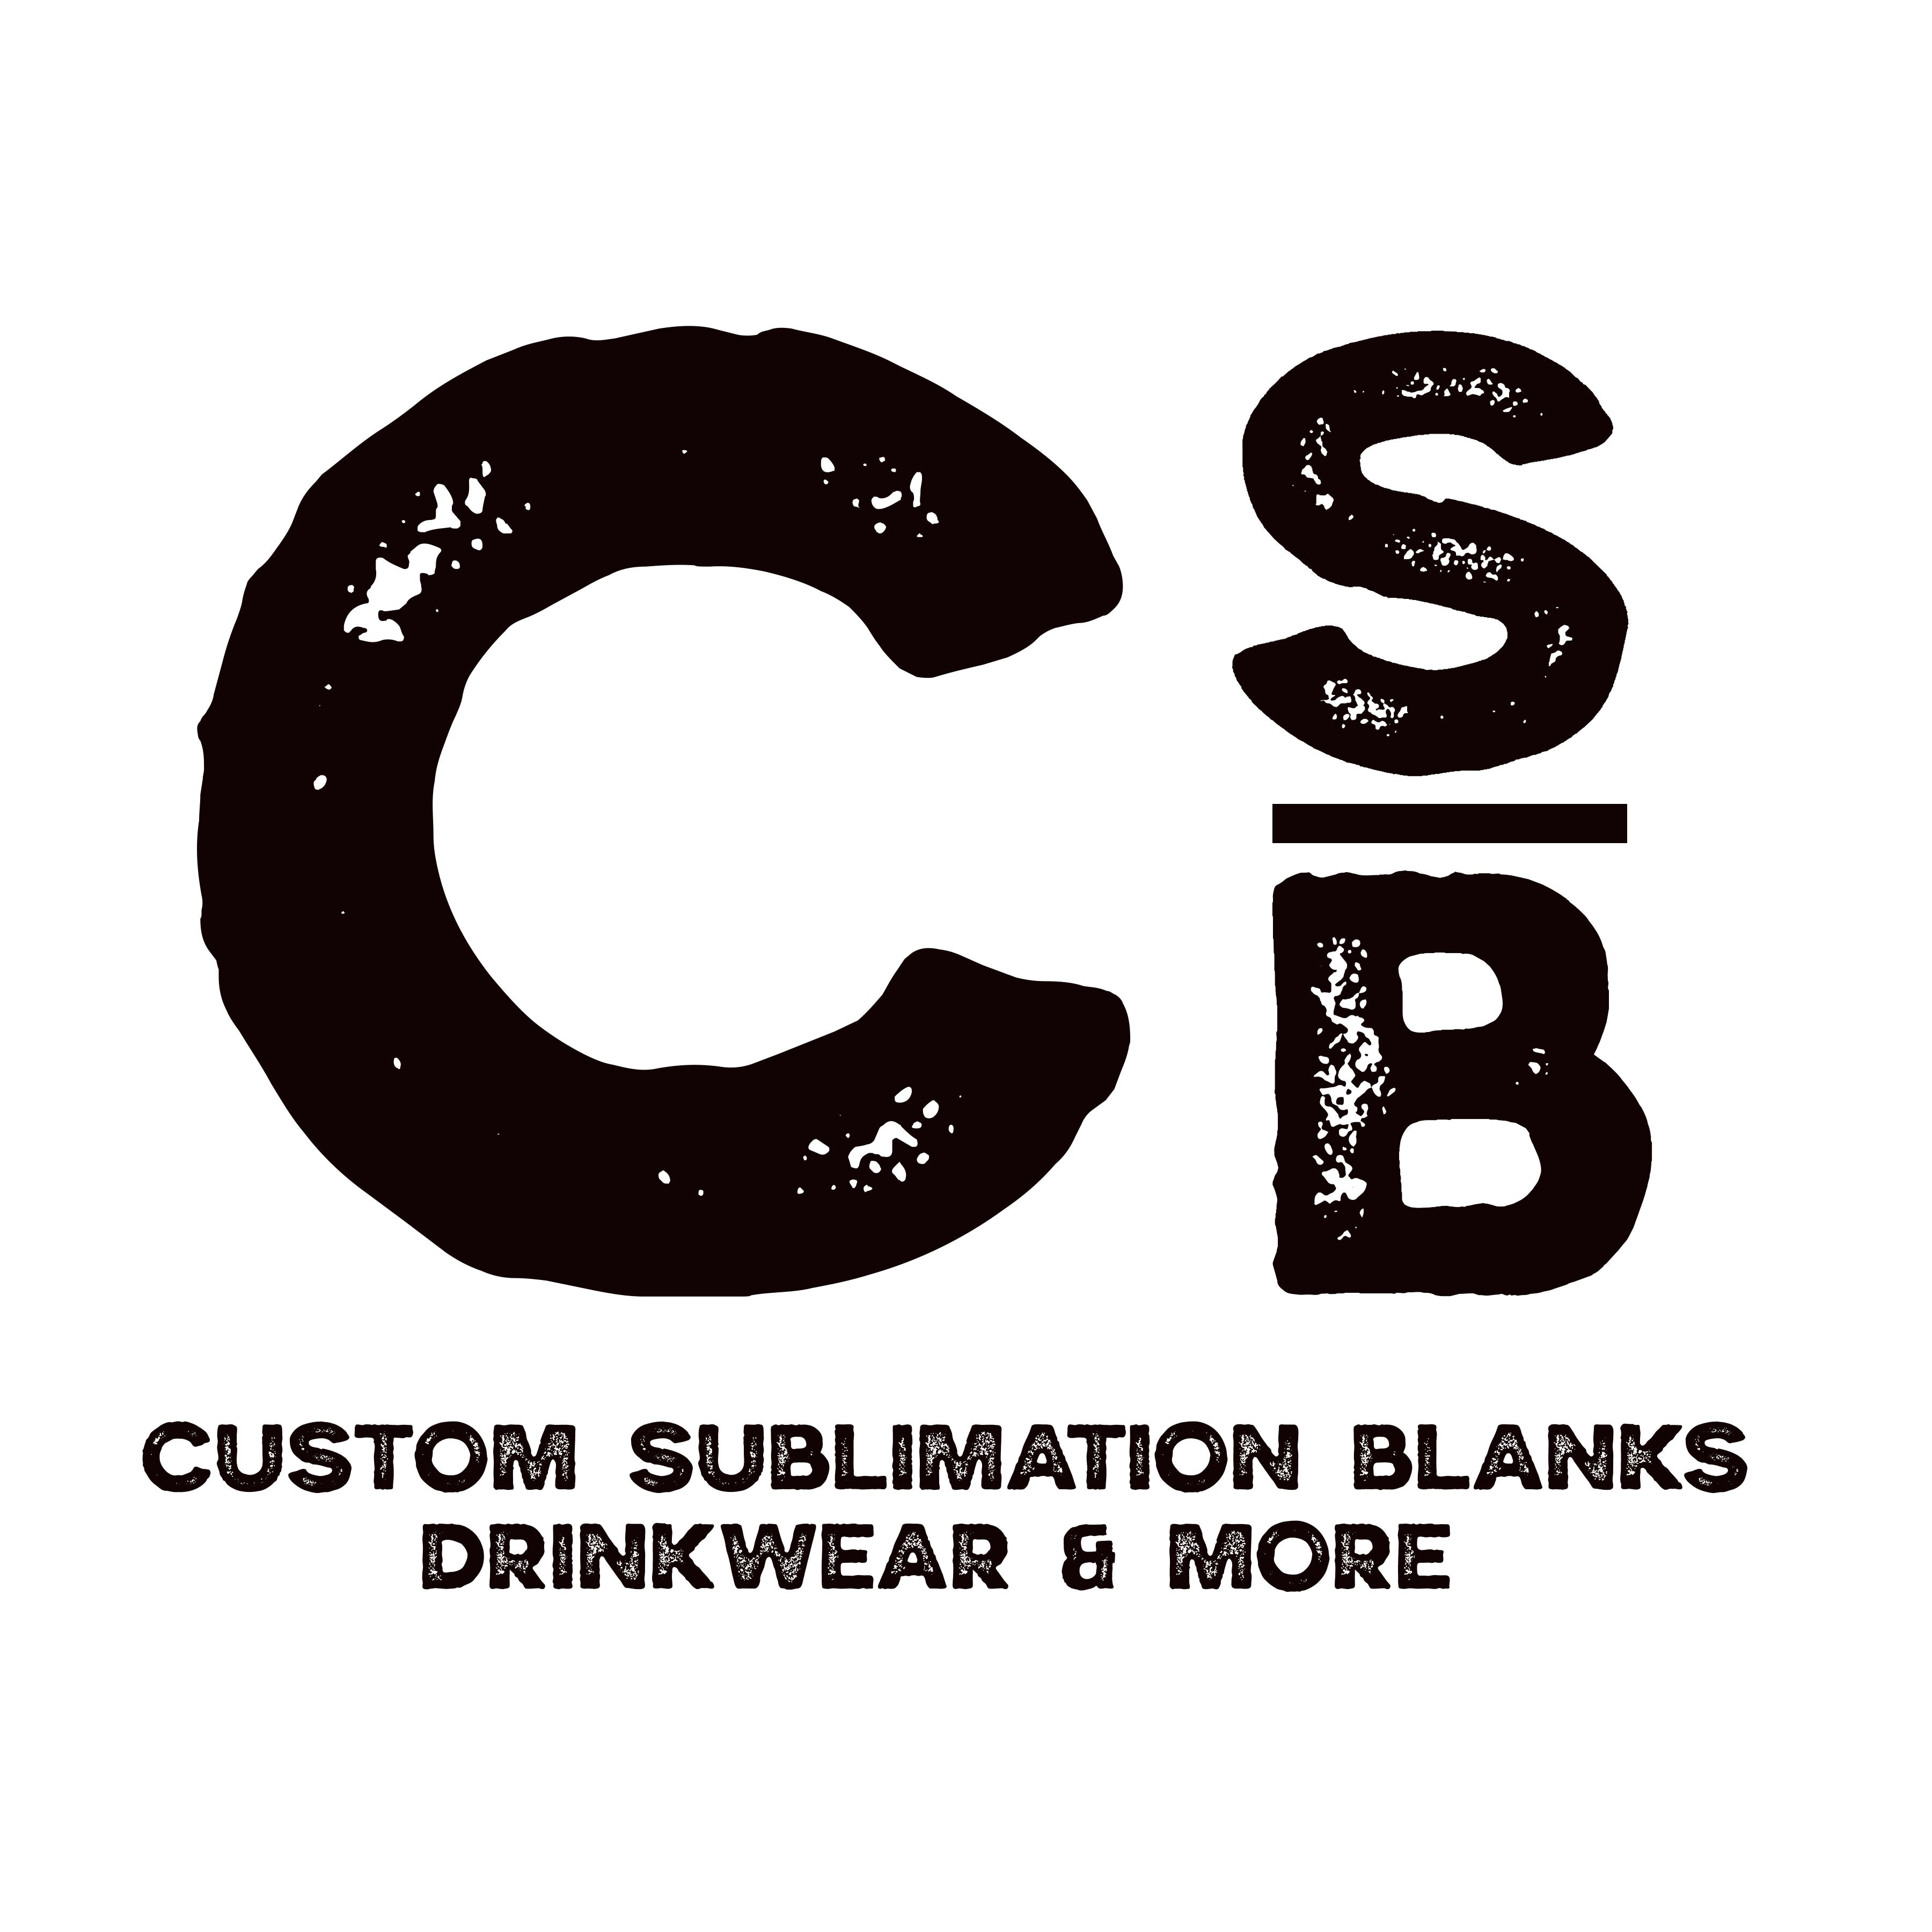 Custom Sublimation Blanks